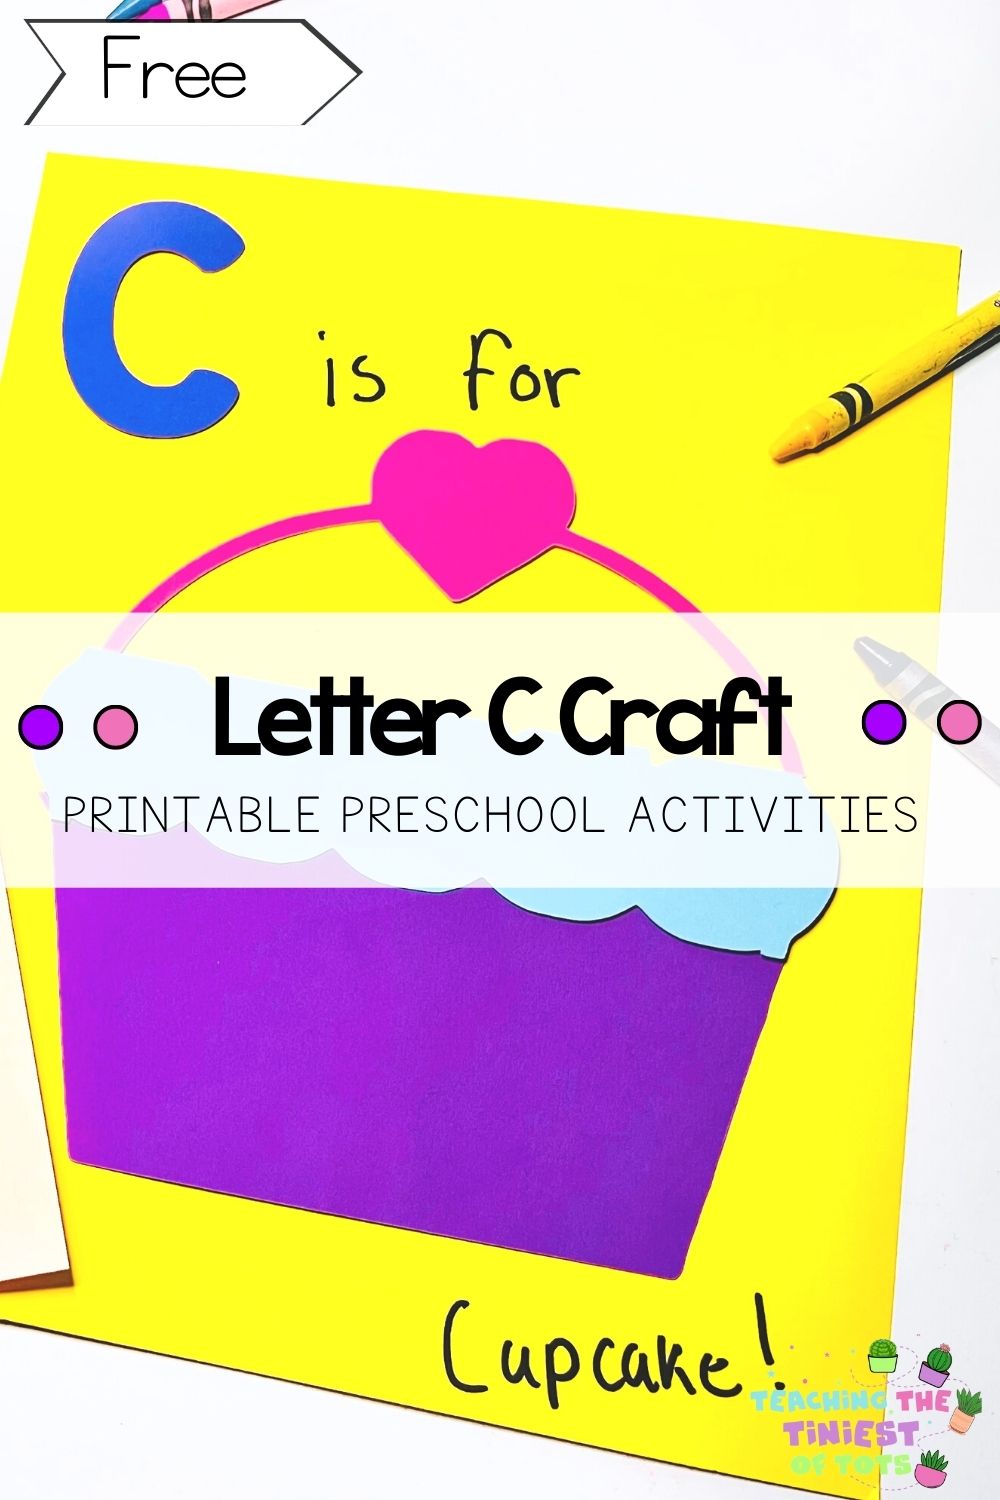 Letter c crafts for preschoolers freebie